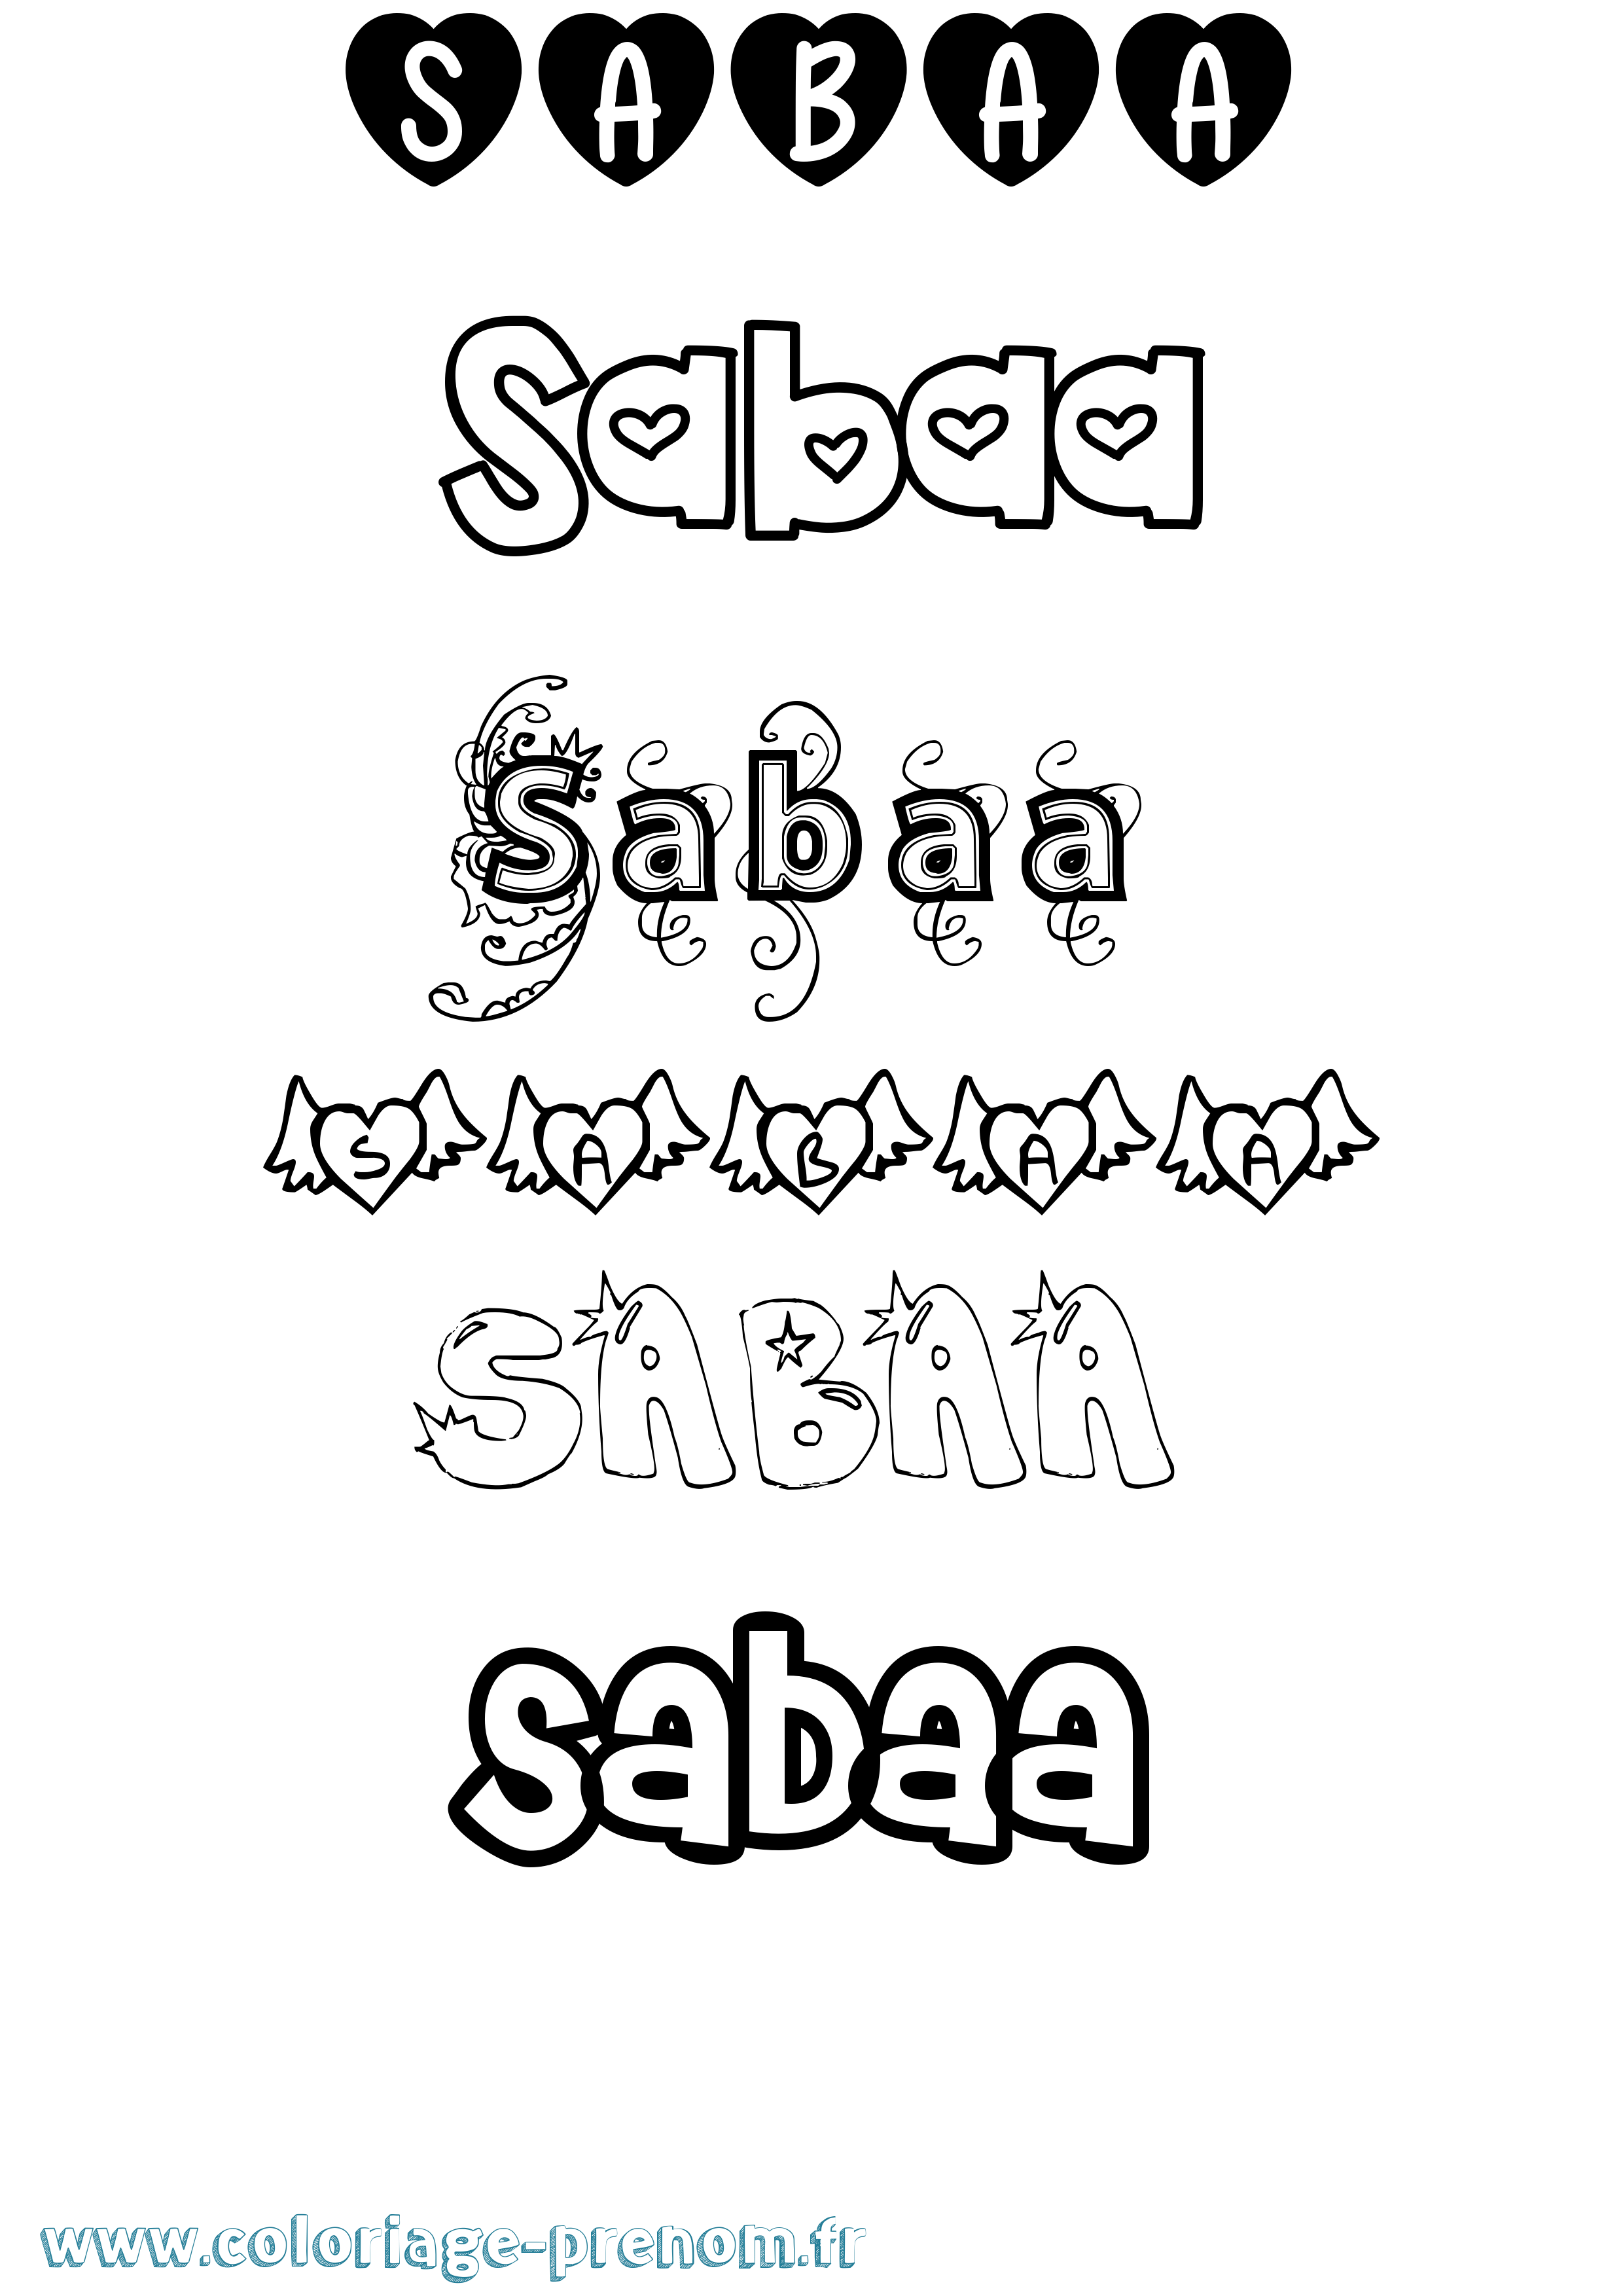 Coloriage prénom Sabaa Girly